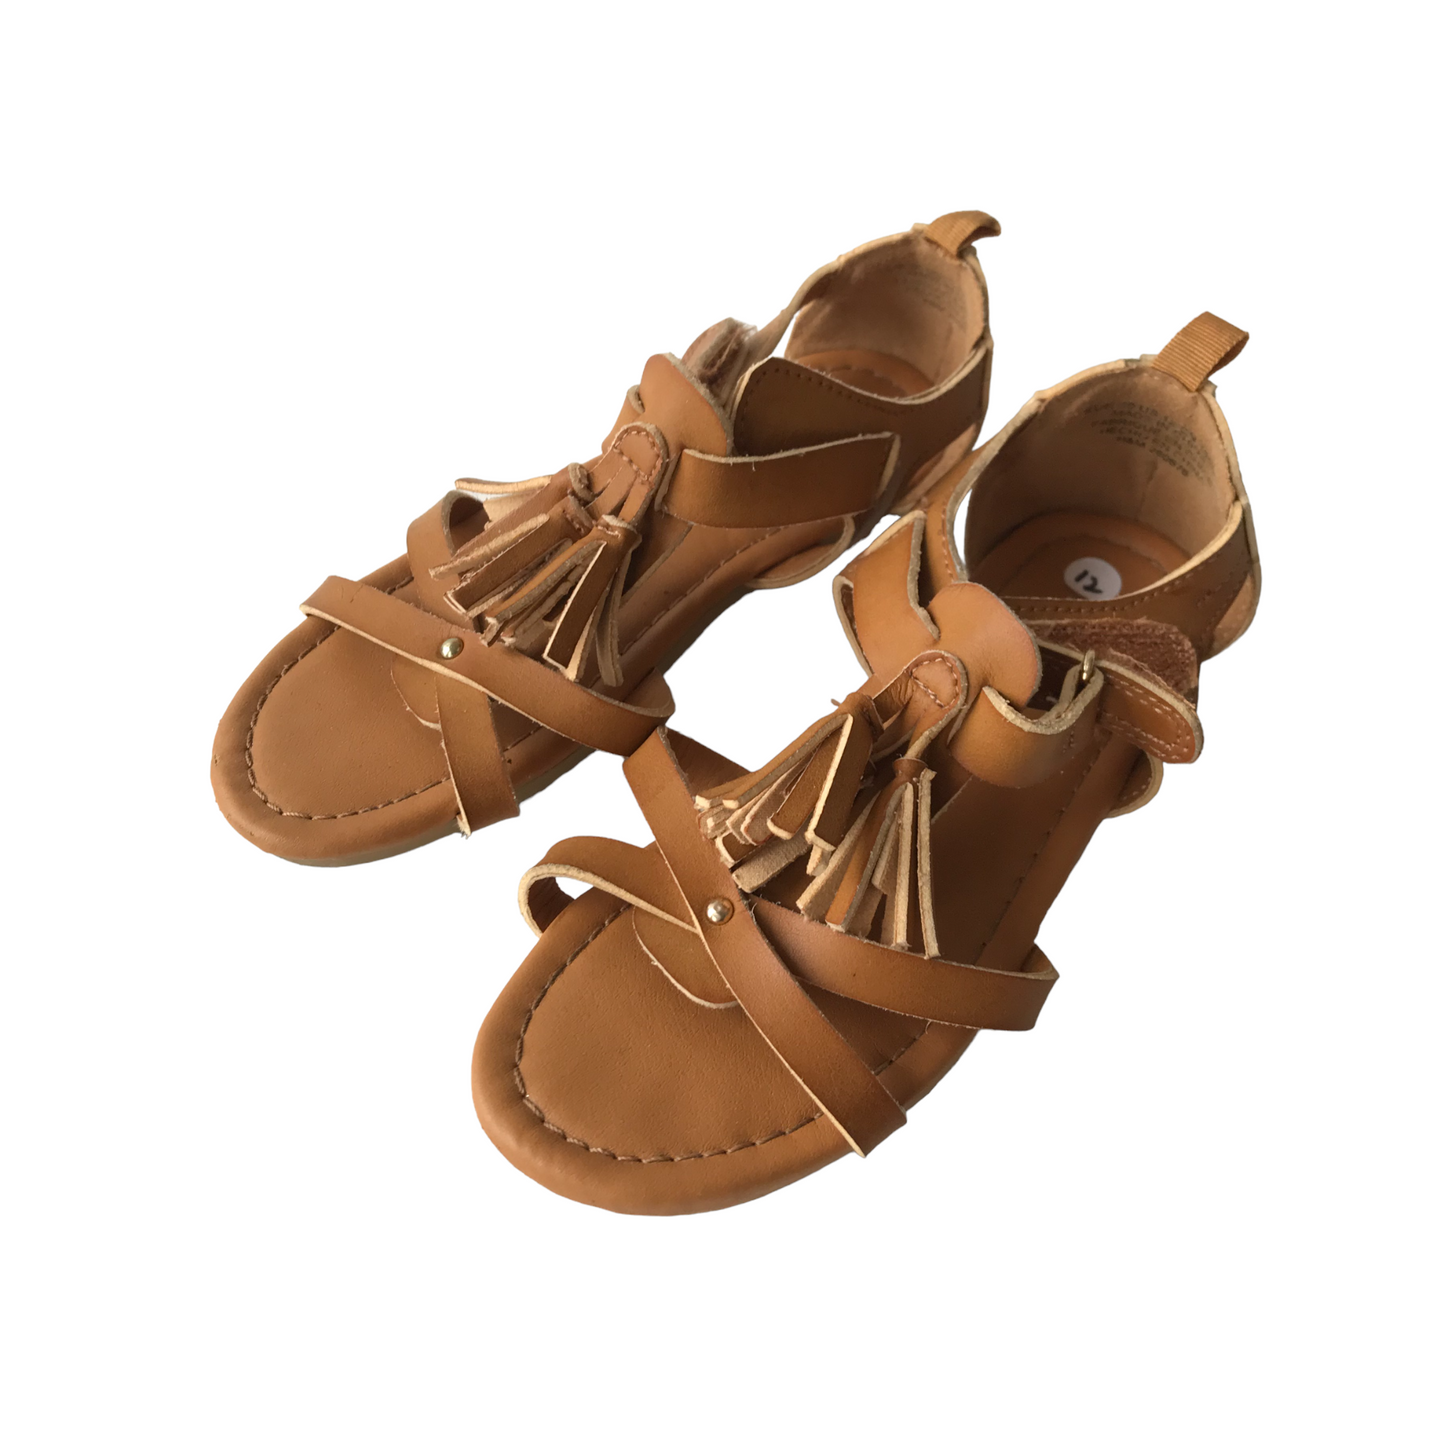 H&M Brown Leather-style tassel Sandals Shoe Size 12 (jr)